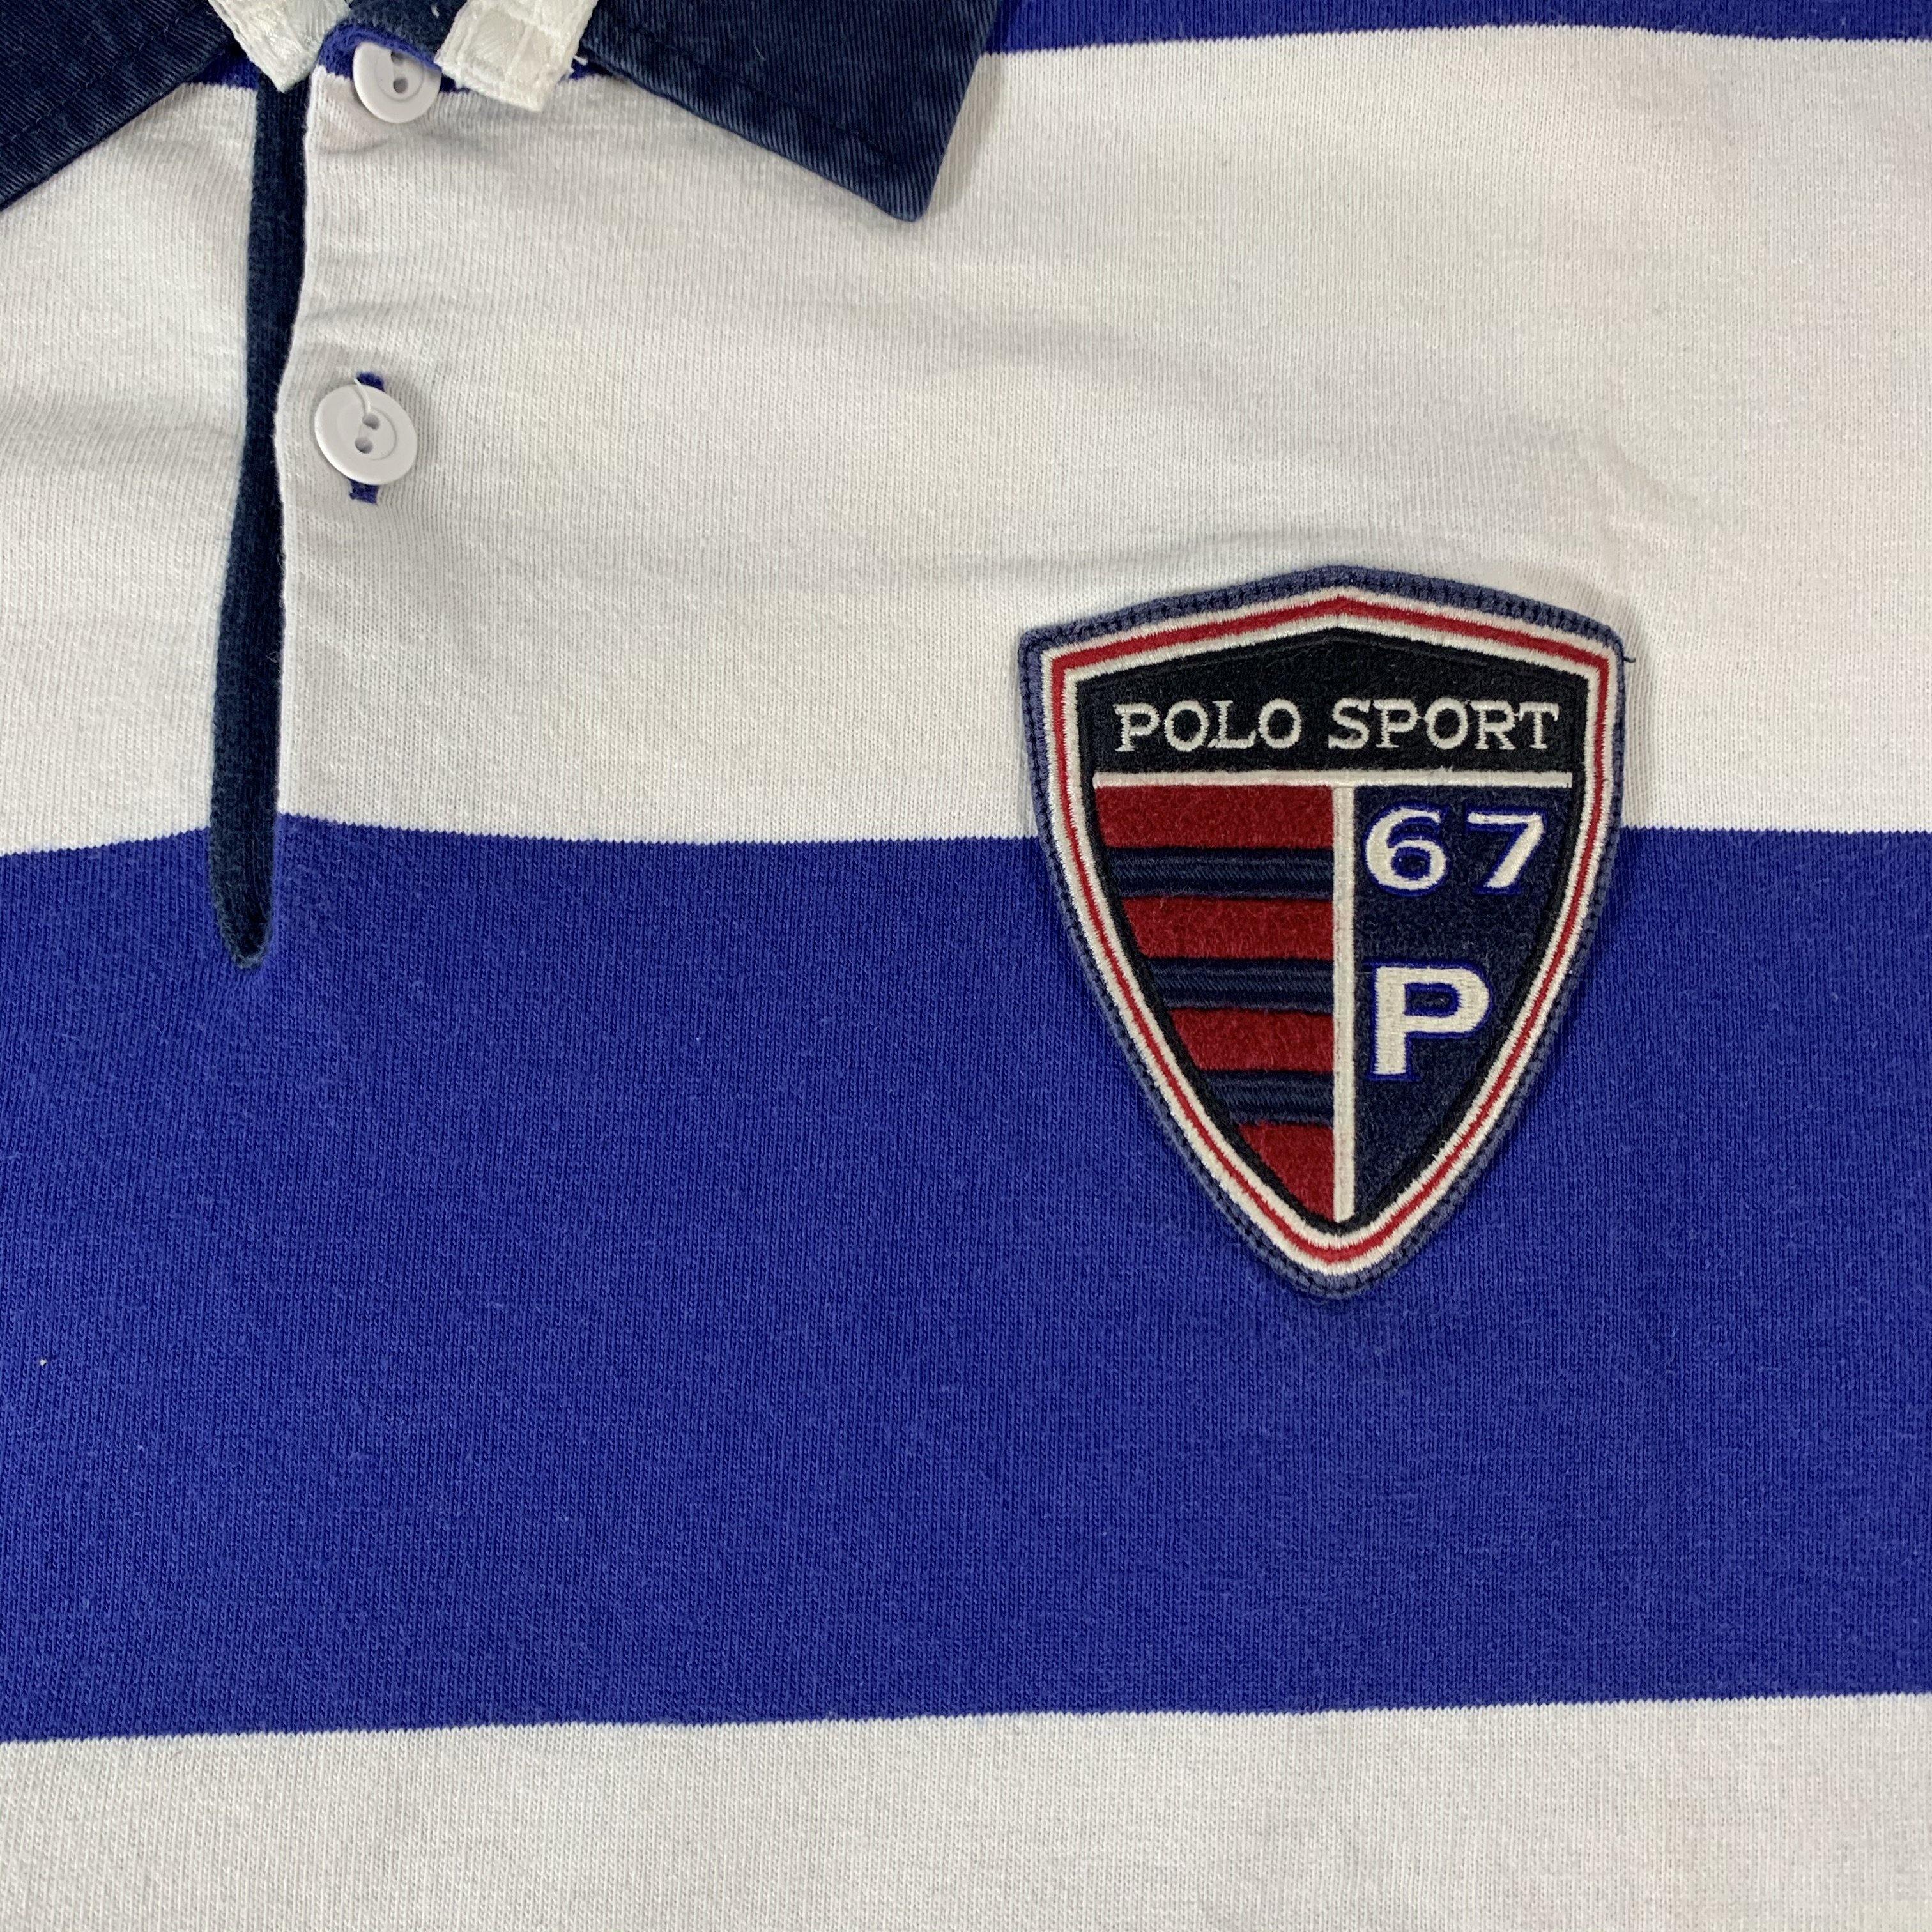 Polo Ralph Lauren Polo Sport Rugby Shirt